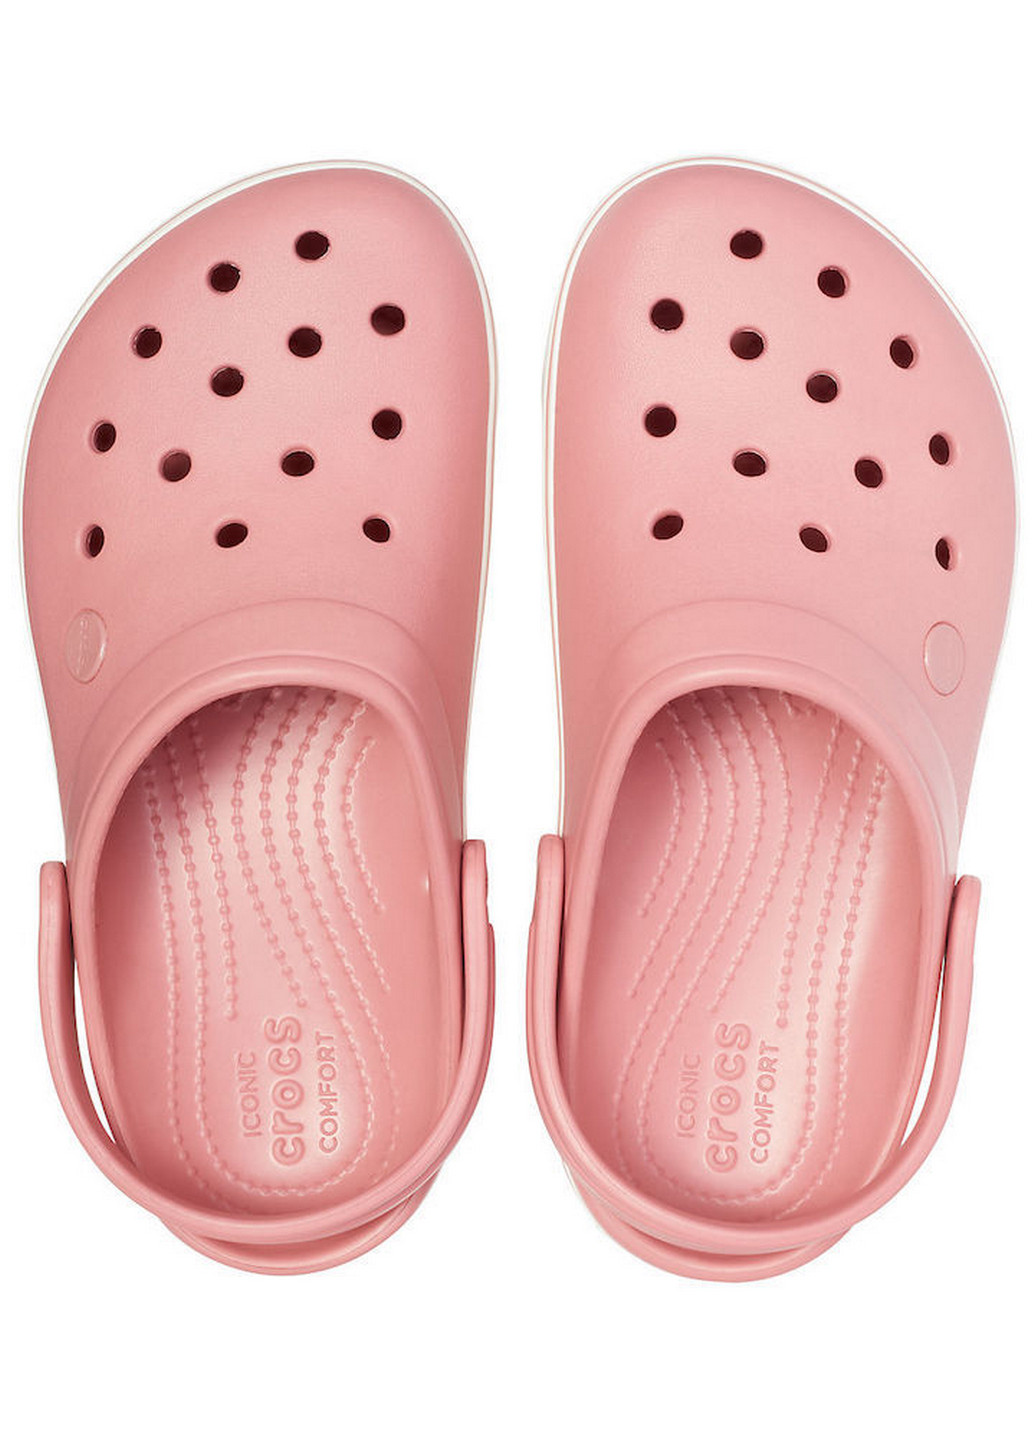 Розовые сабо крокс Crocs